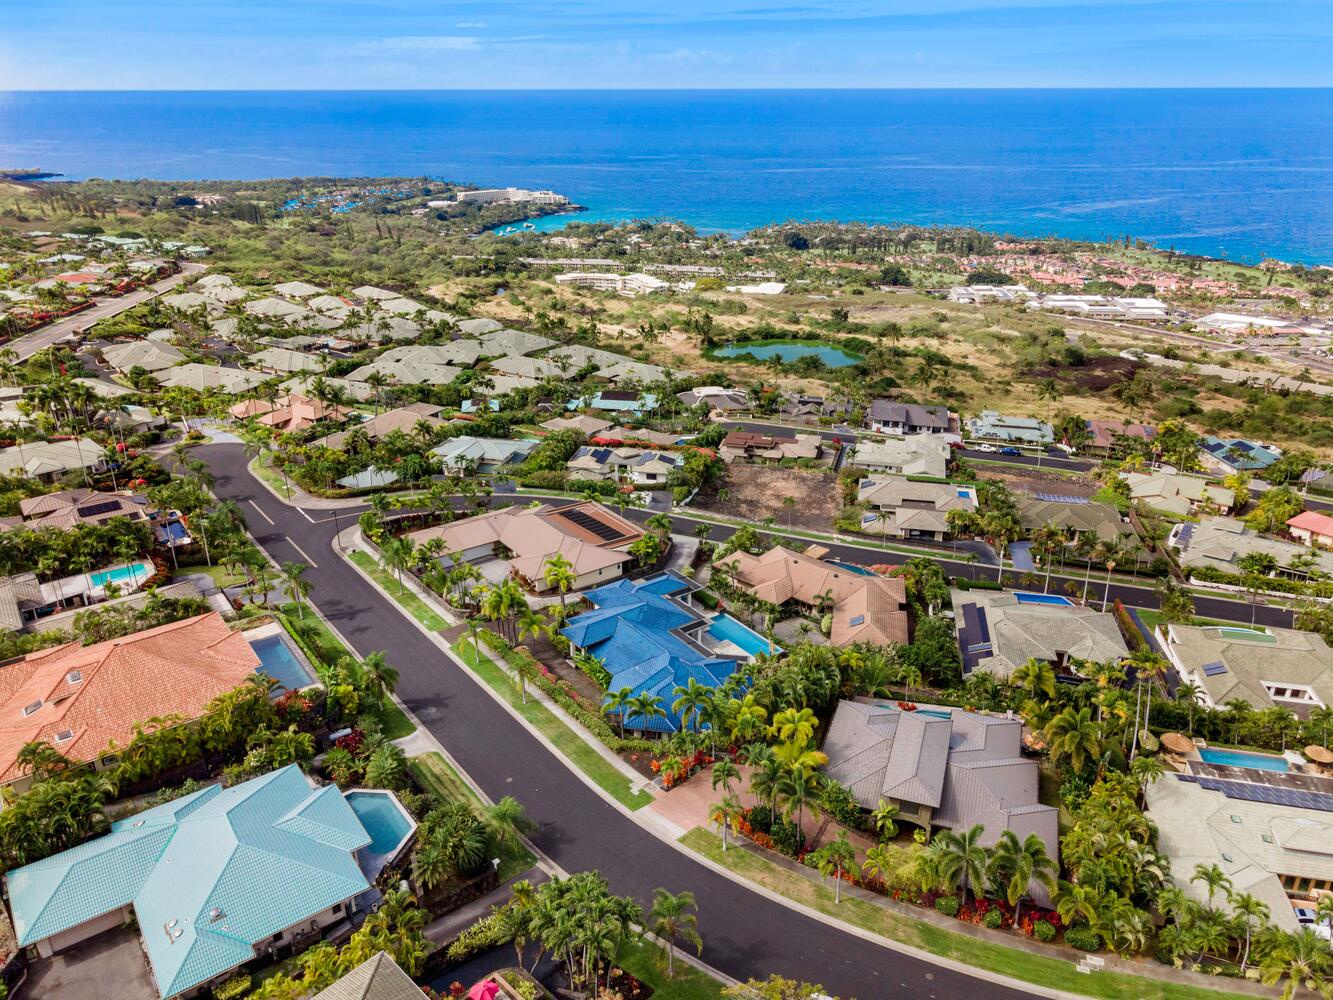 Kailua Kona Vacation Rentals, Blue Hawaii - Aerial shot of the location.